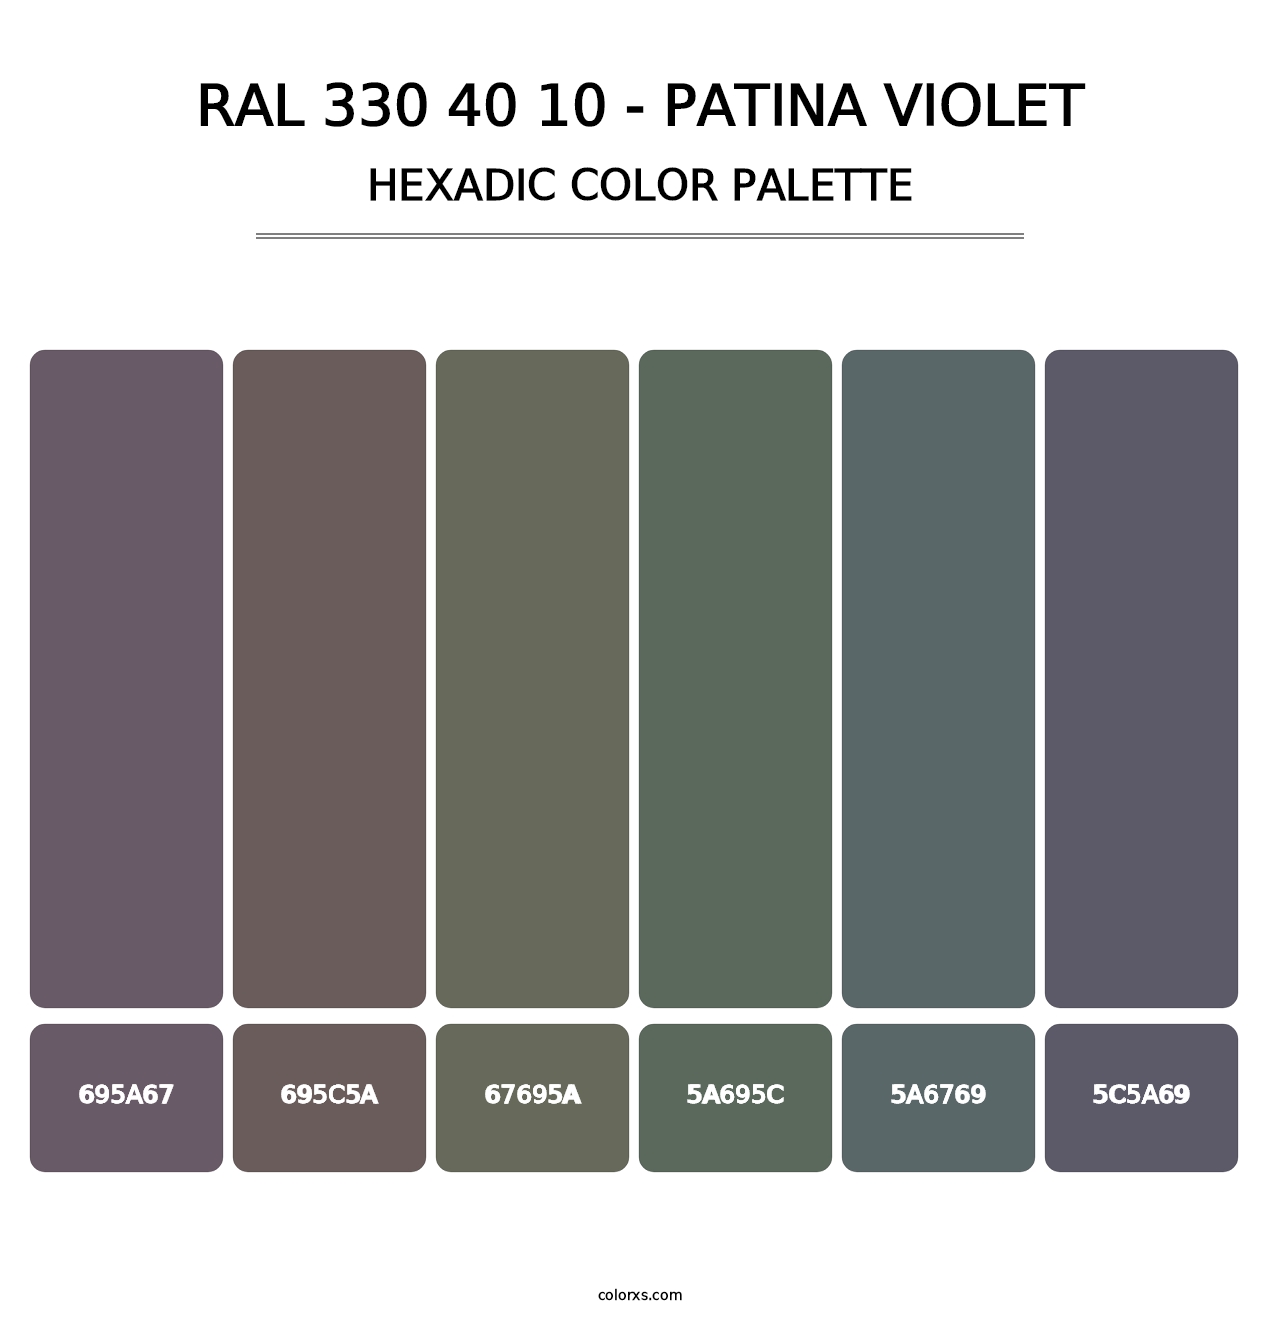 RAL 330 40 10 - Patina Violet - Hexadic Color Palette